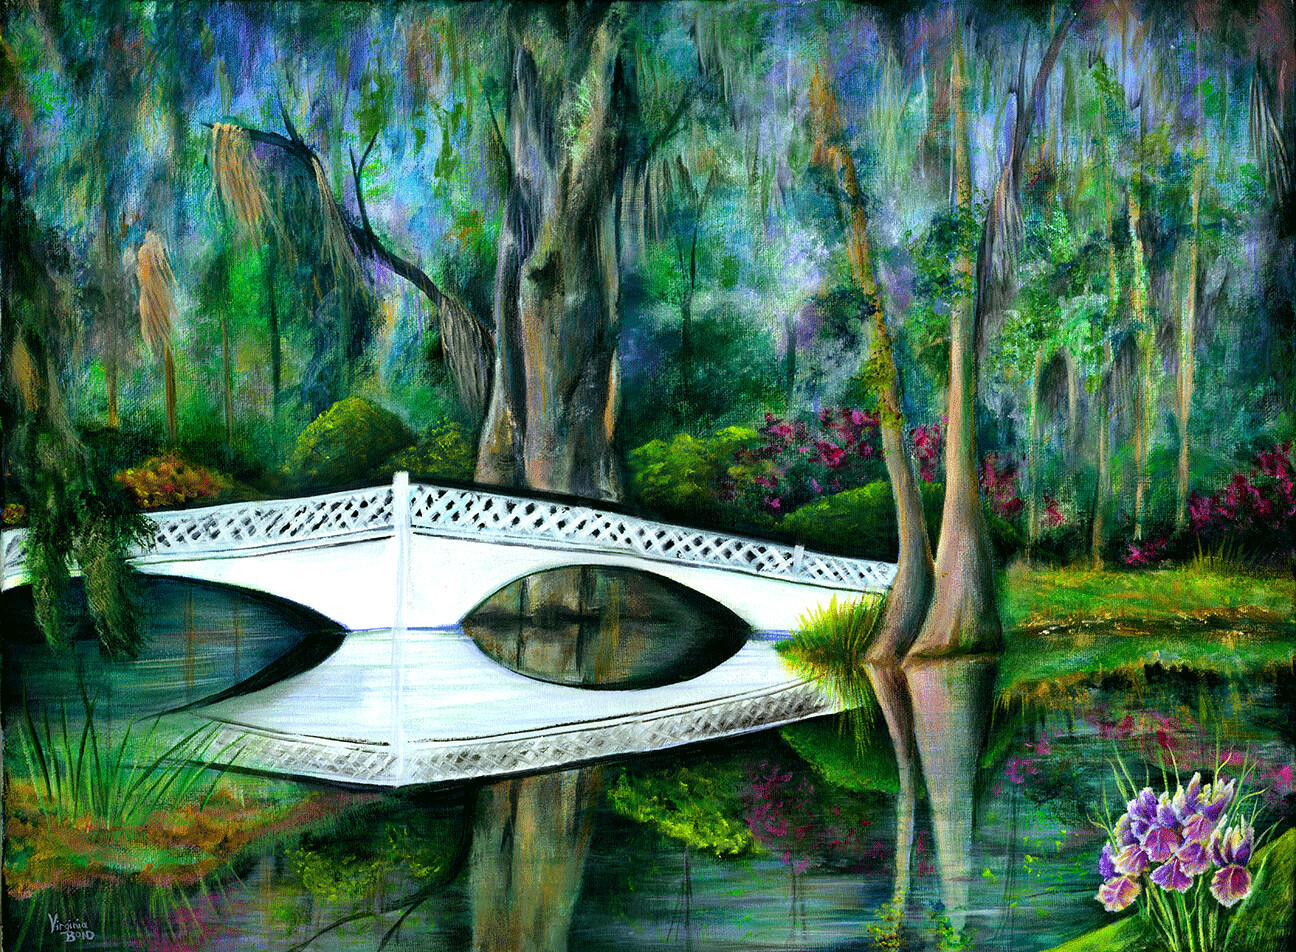 "Garden Bridge" by Virginia Bond